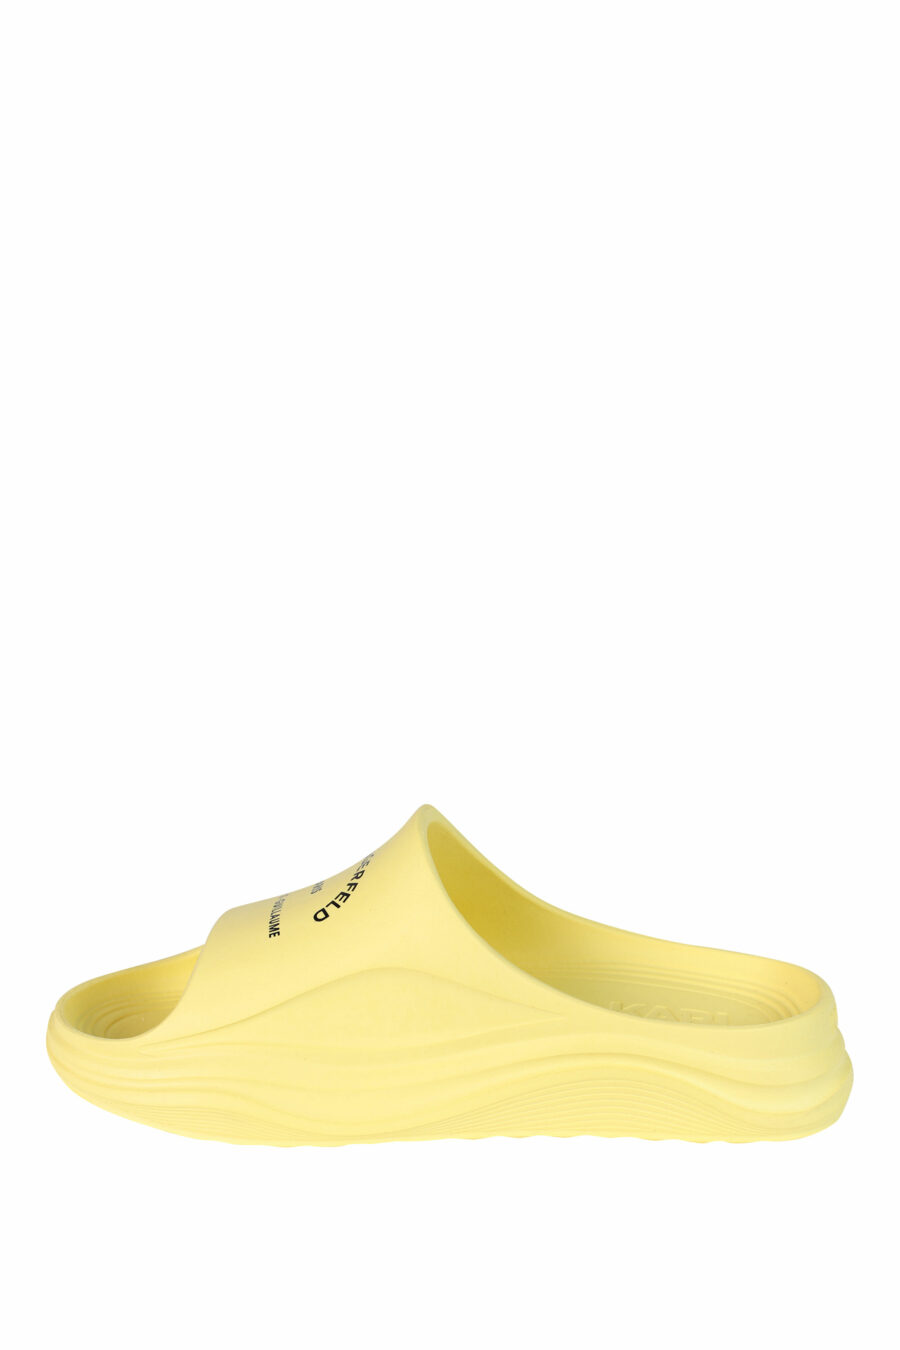 Sandalias amarillas "skoona" con logo - 5059529246012 3